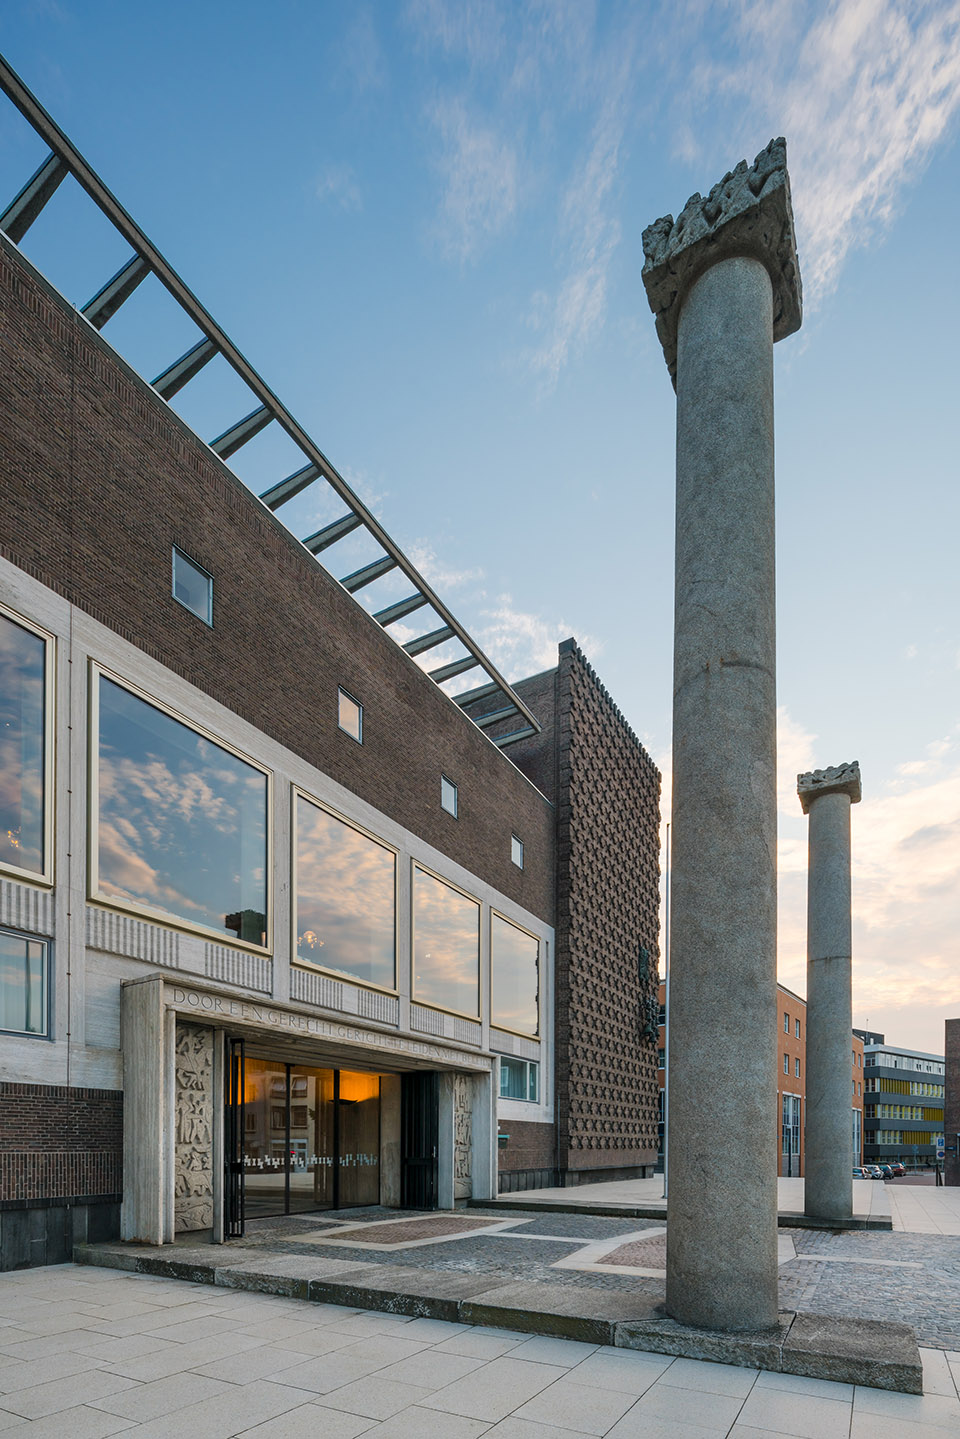 Gelderland省政厅，荷兰/新与旧，历史与创意、厚重与轻盈-22